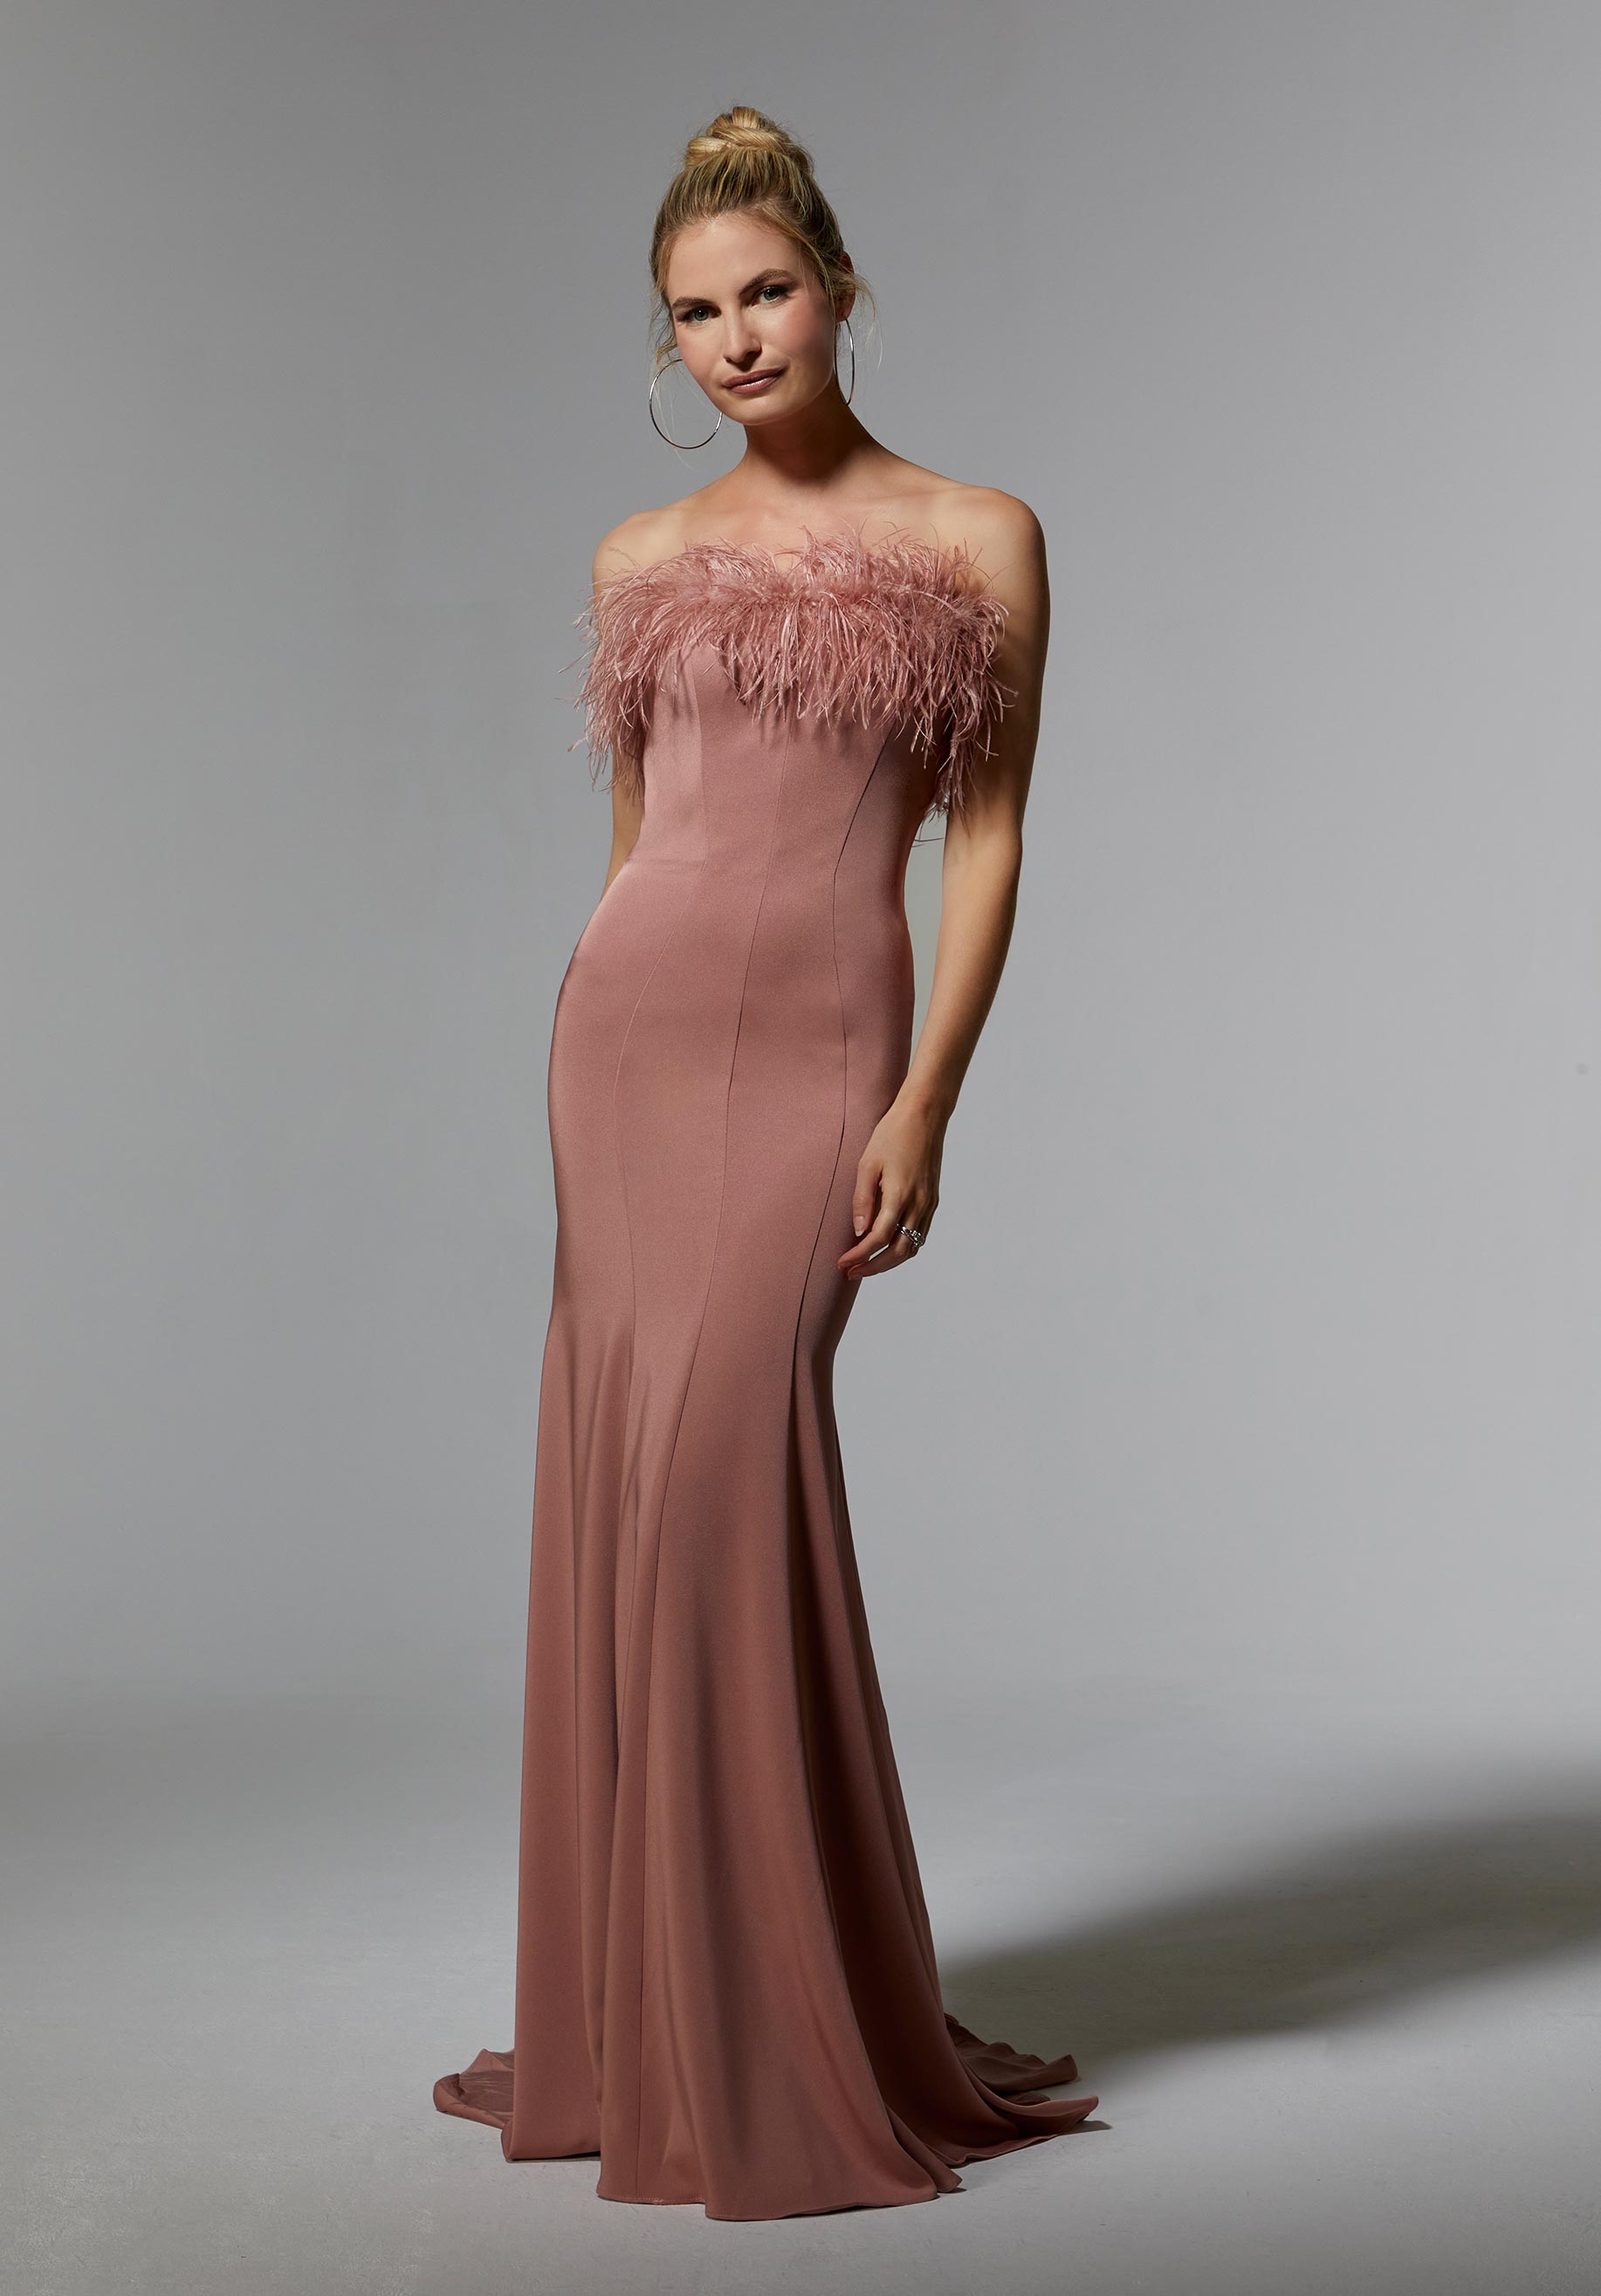 MGNY - 72923 - Cheron's Bridal, Mother/Party Dress